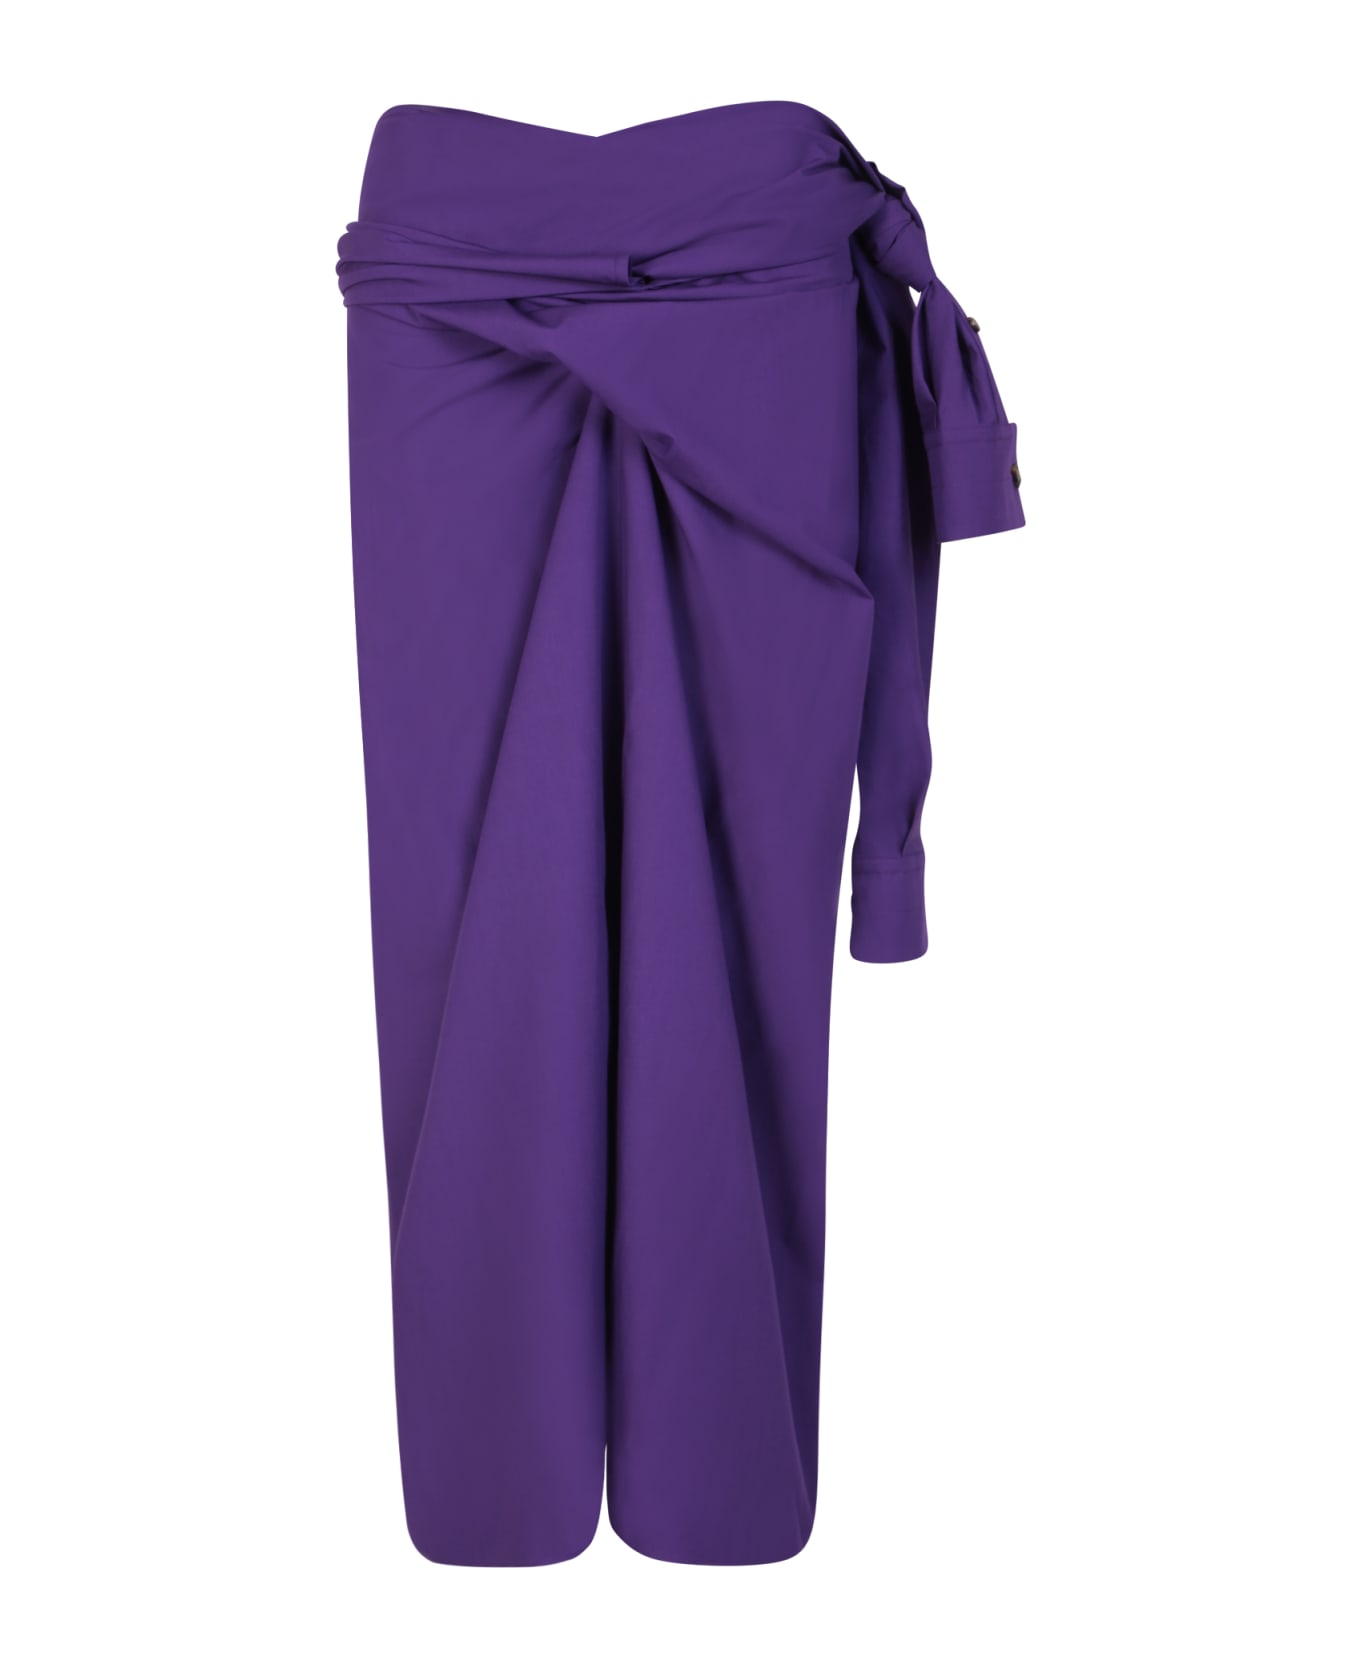 Quira Wrapped Design Purple Skirt - Purple